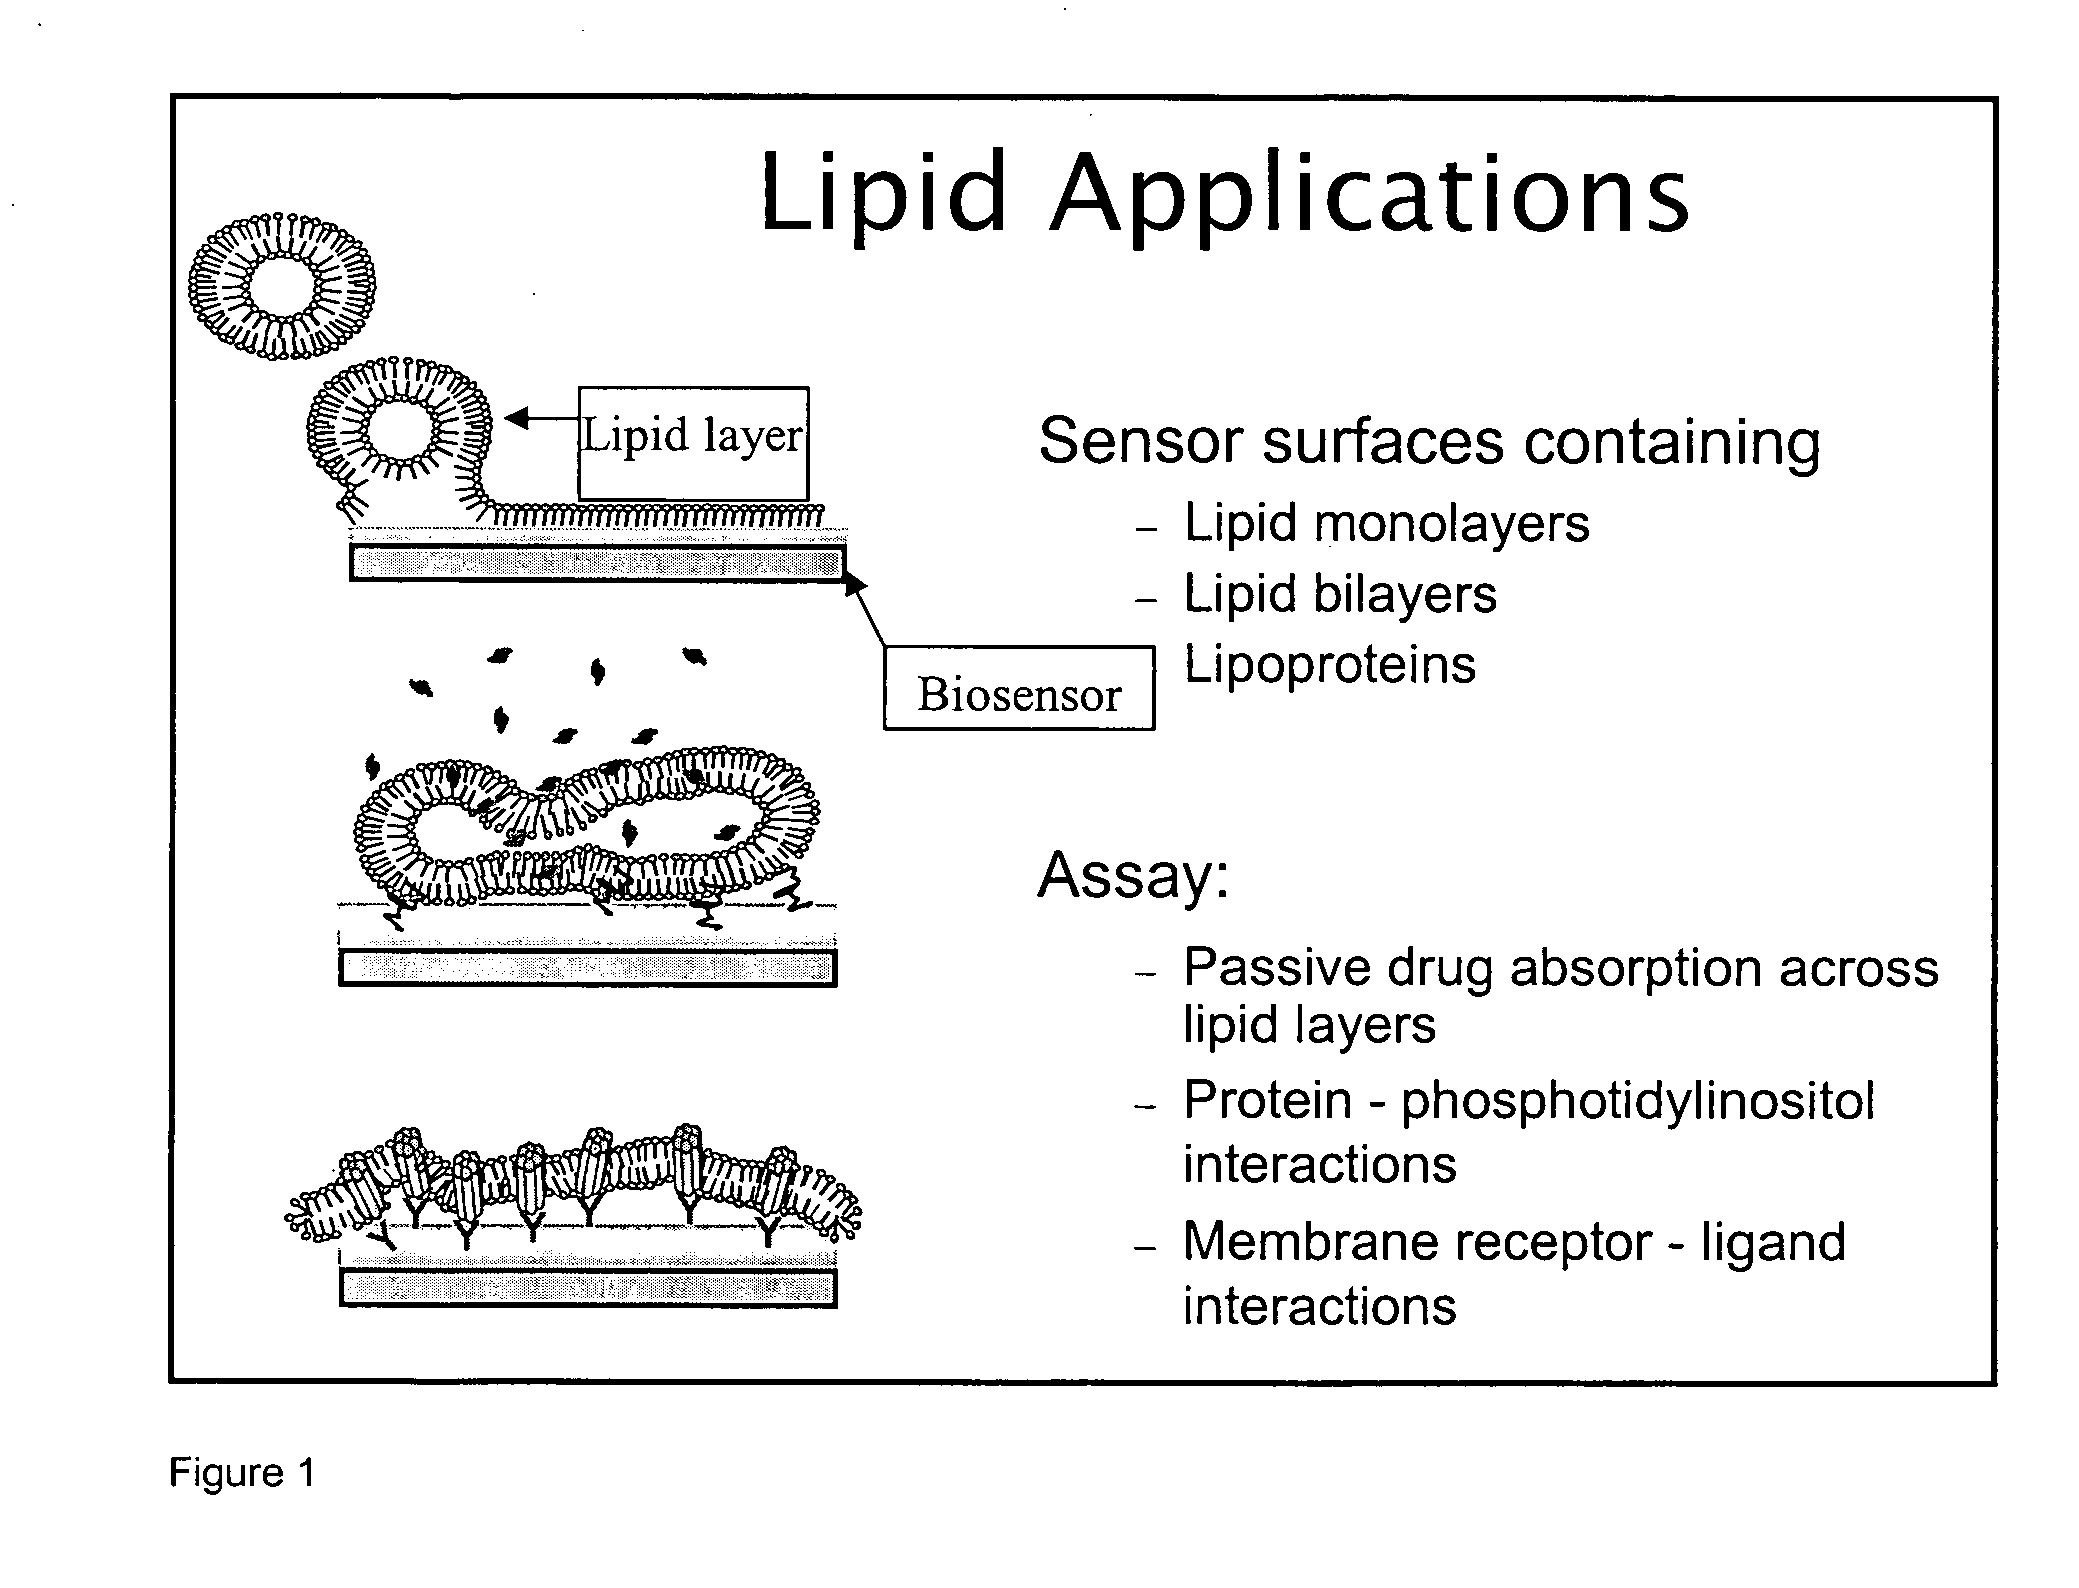 Proteolipid membrane and lipid membrane biosensor